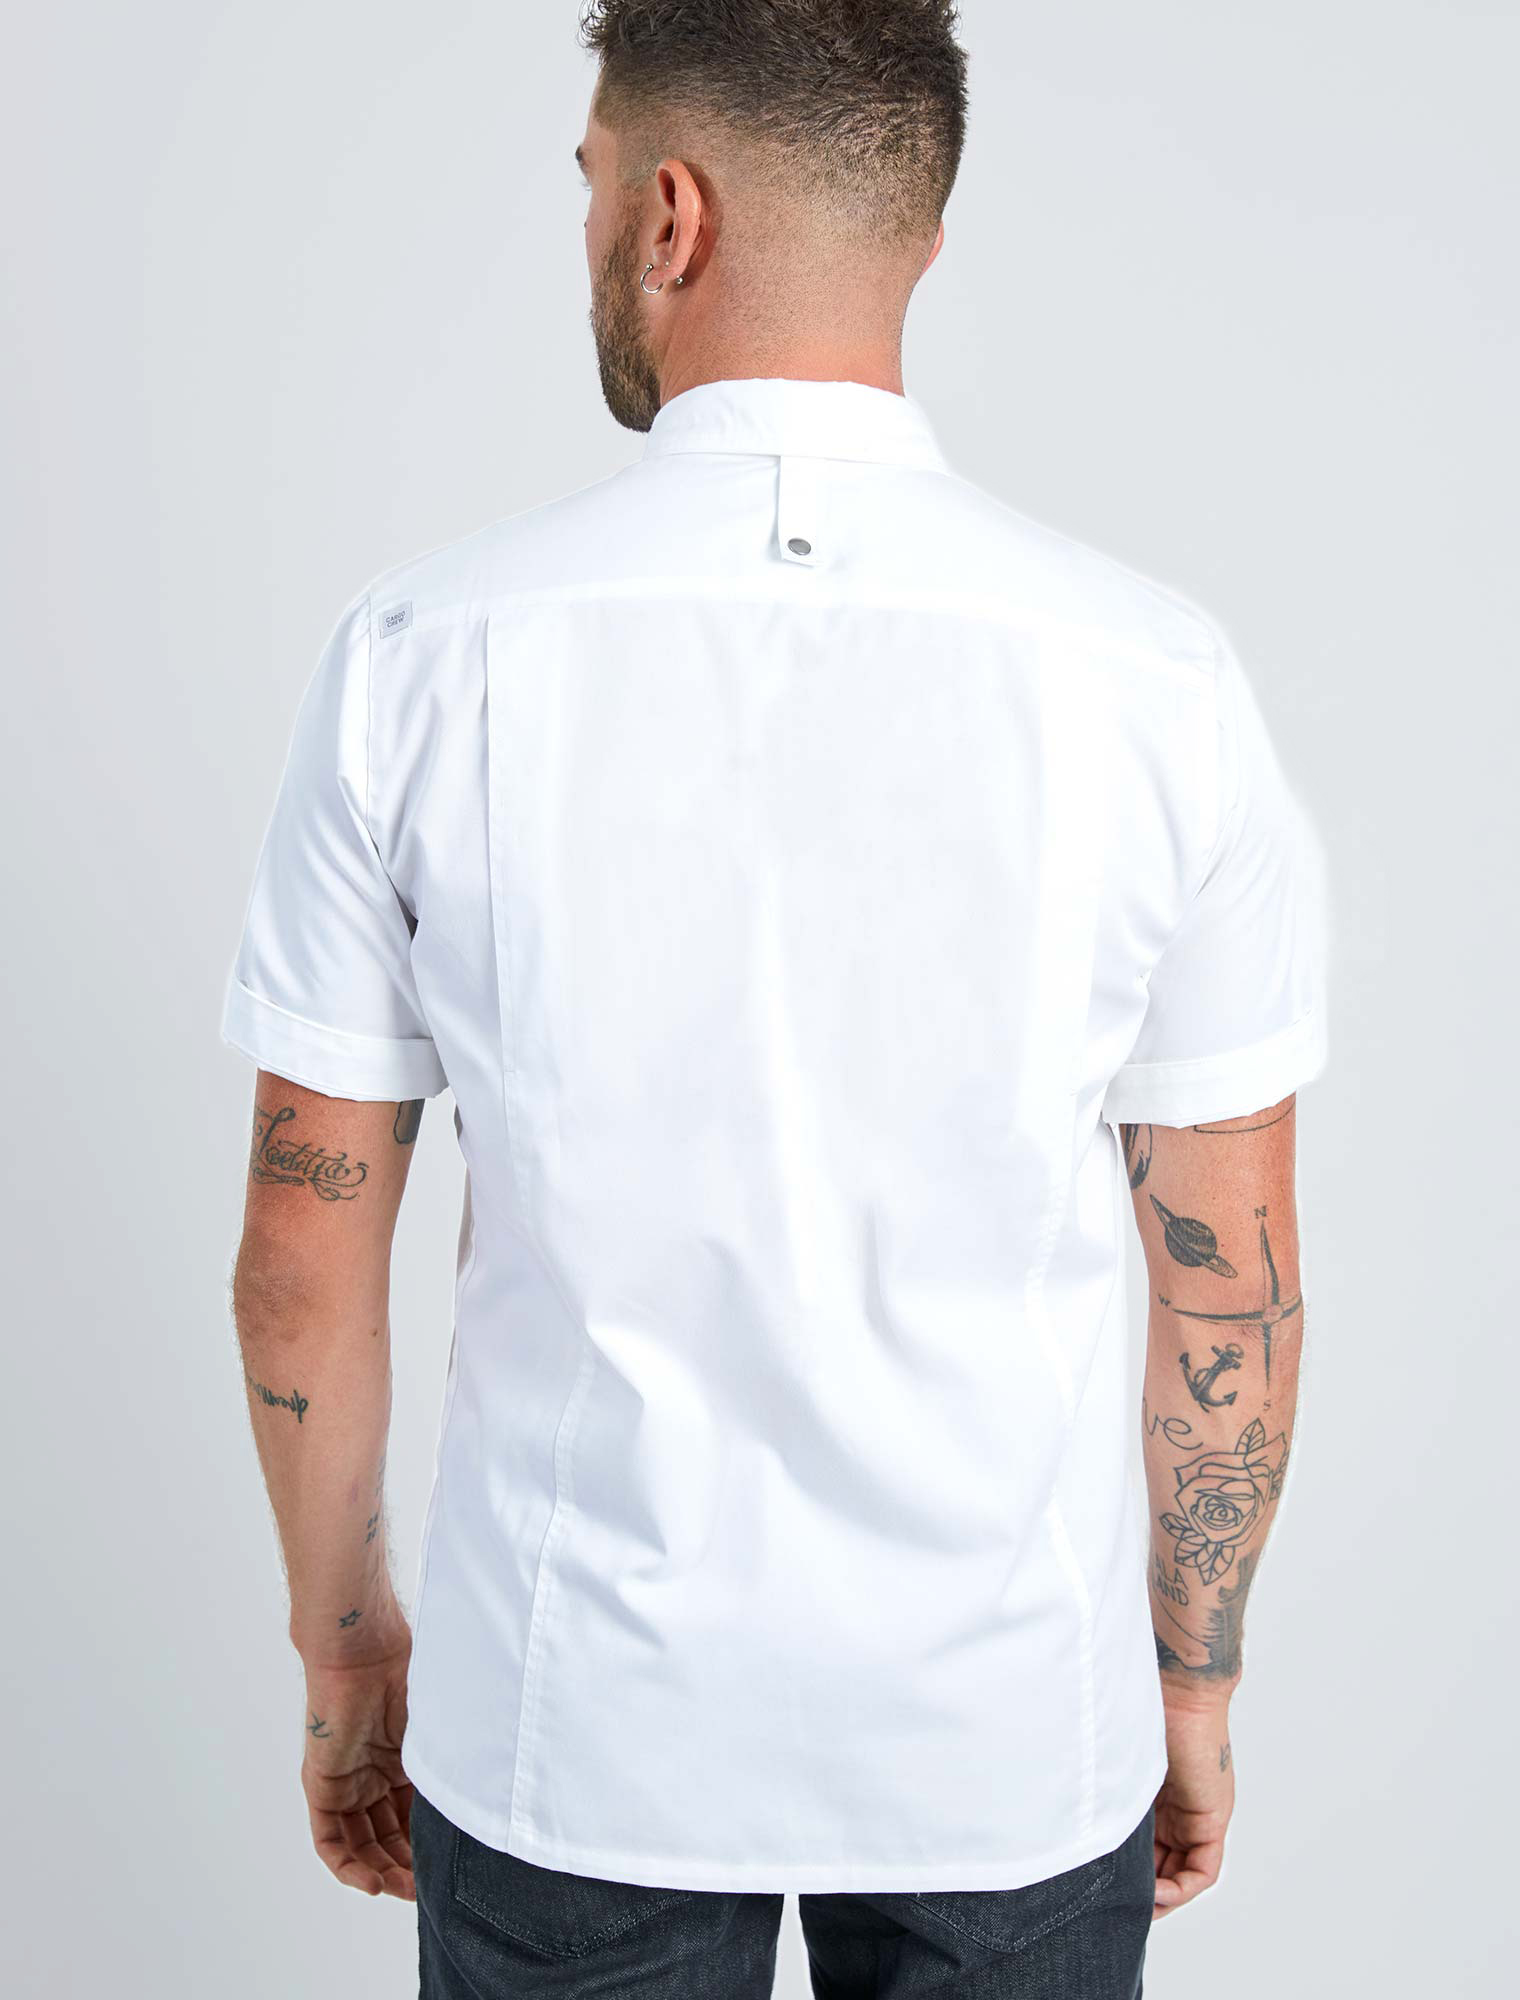 Men's Chef Shirt Jacket - Modern Chef Jacket